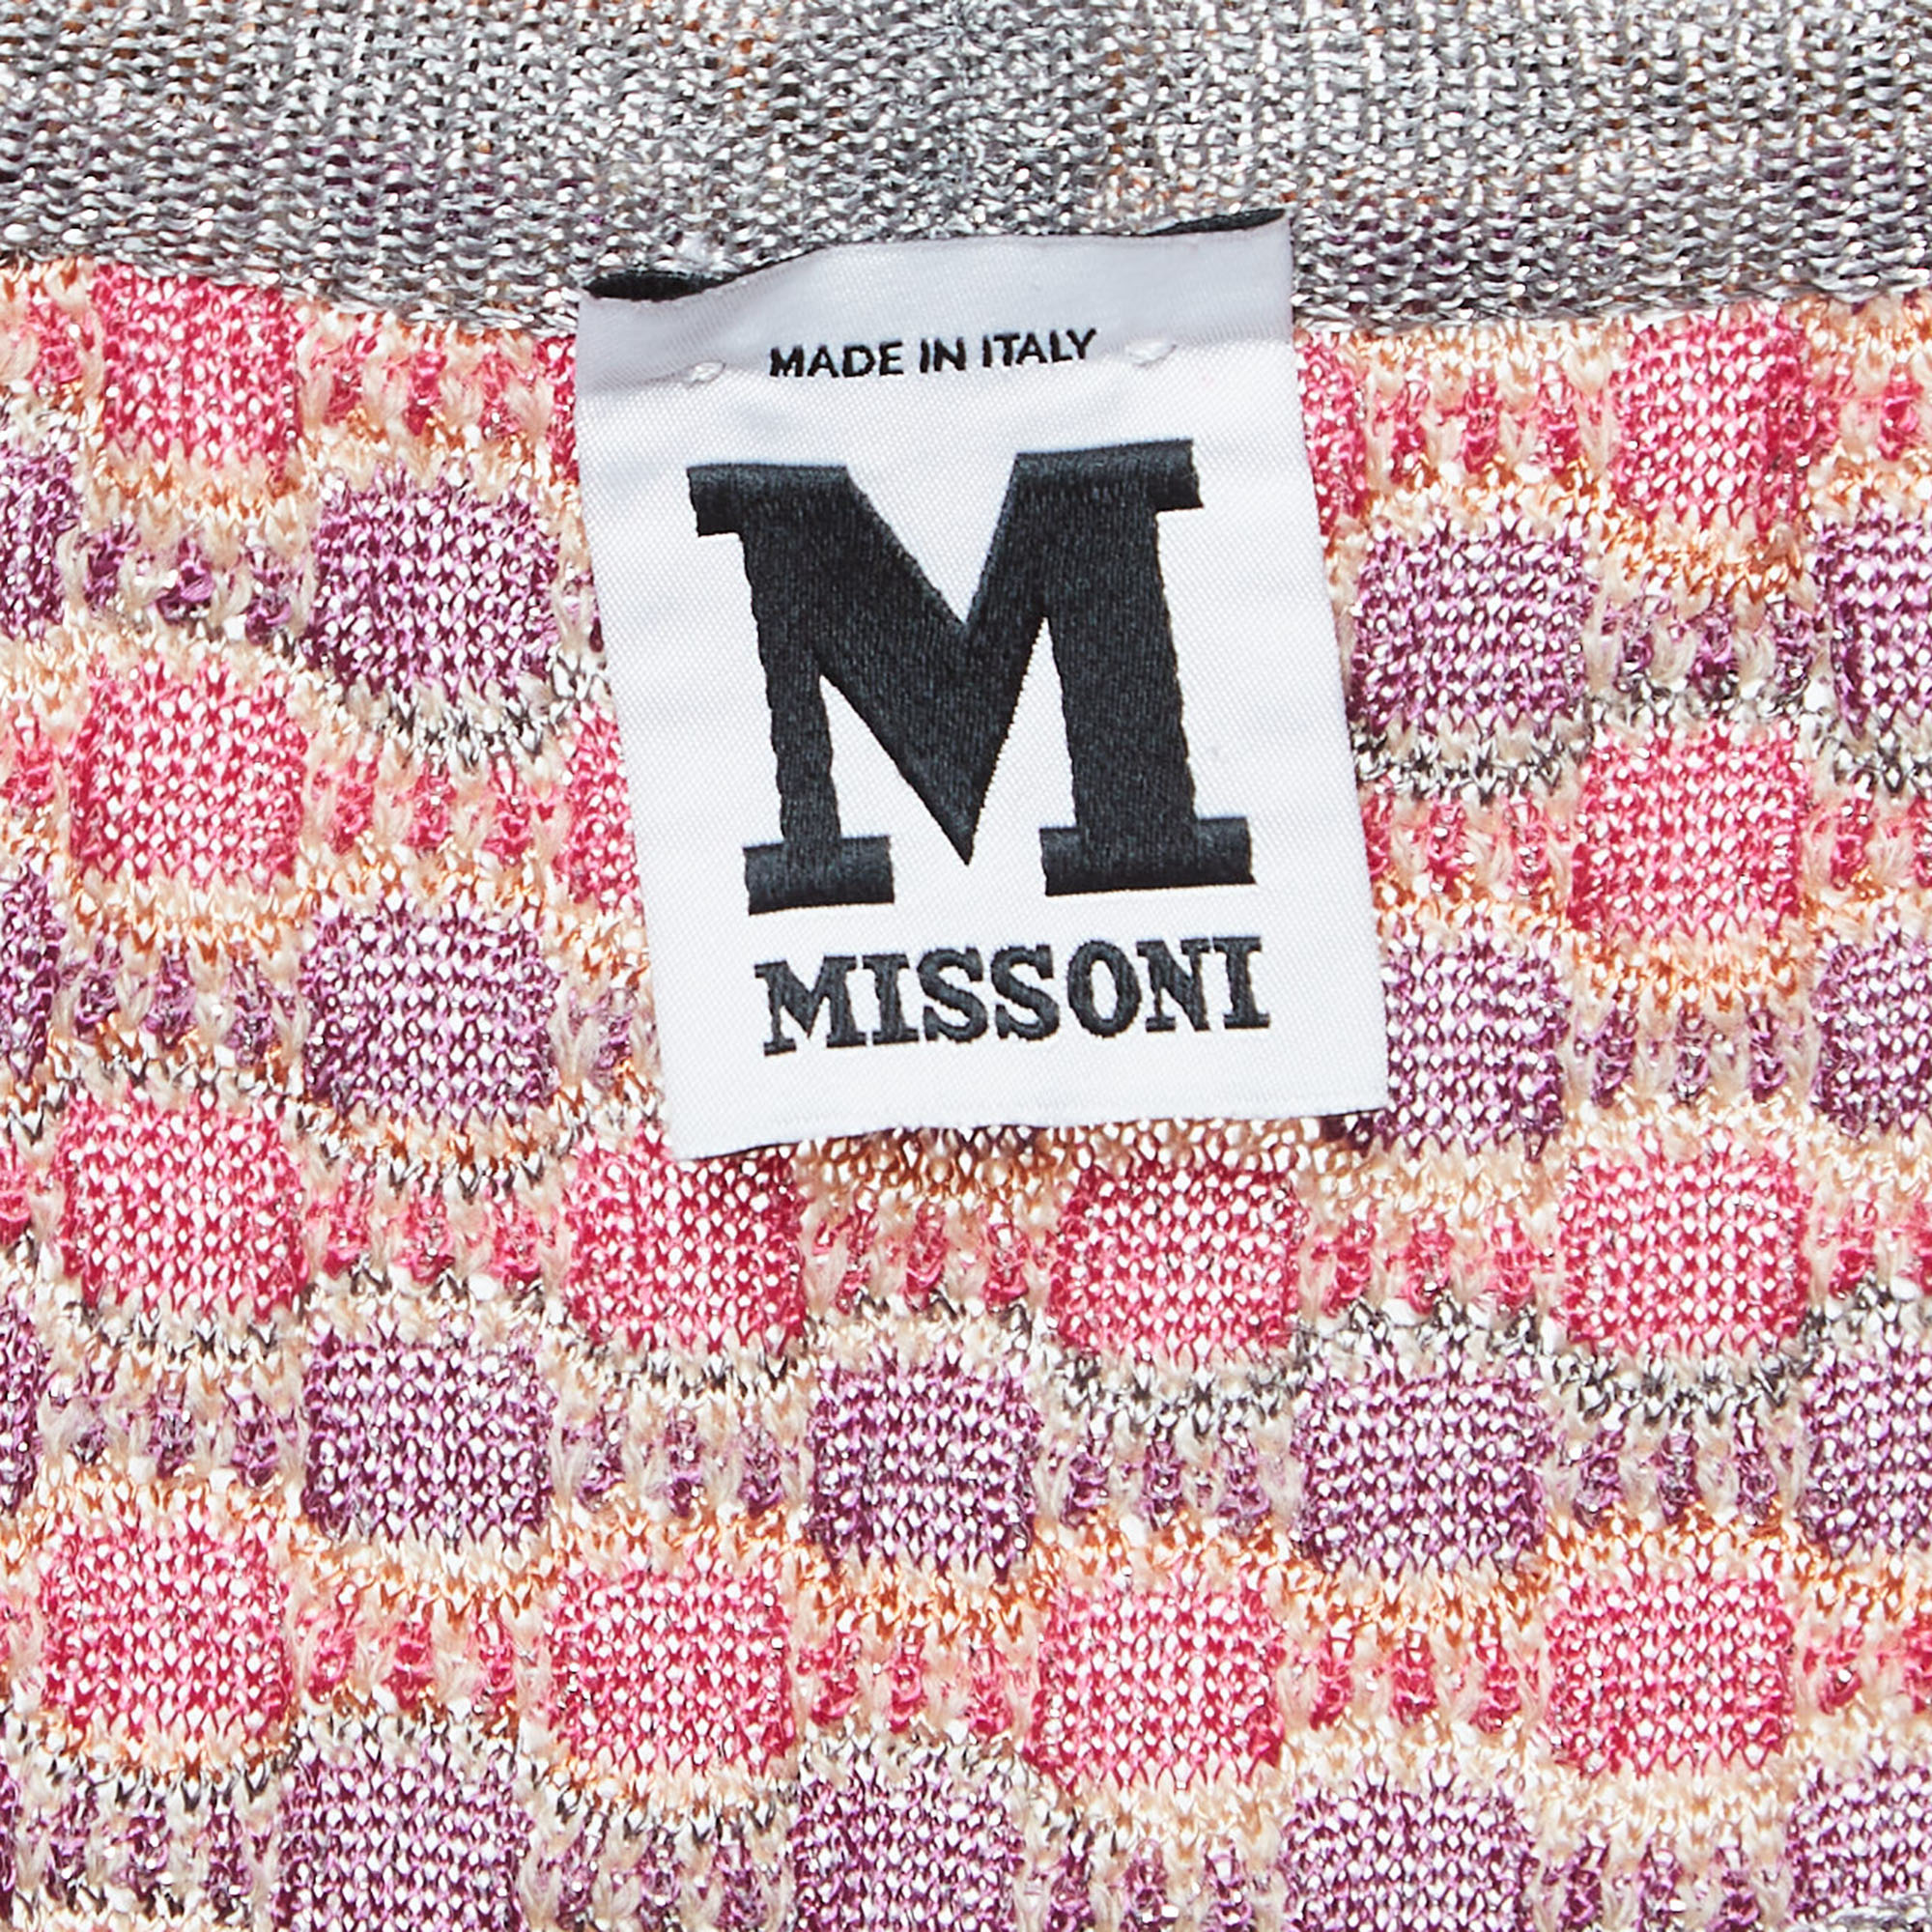 M Missoni Multicolor Patterned Knit Top Shrug Set L